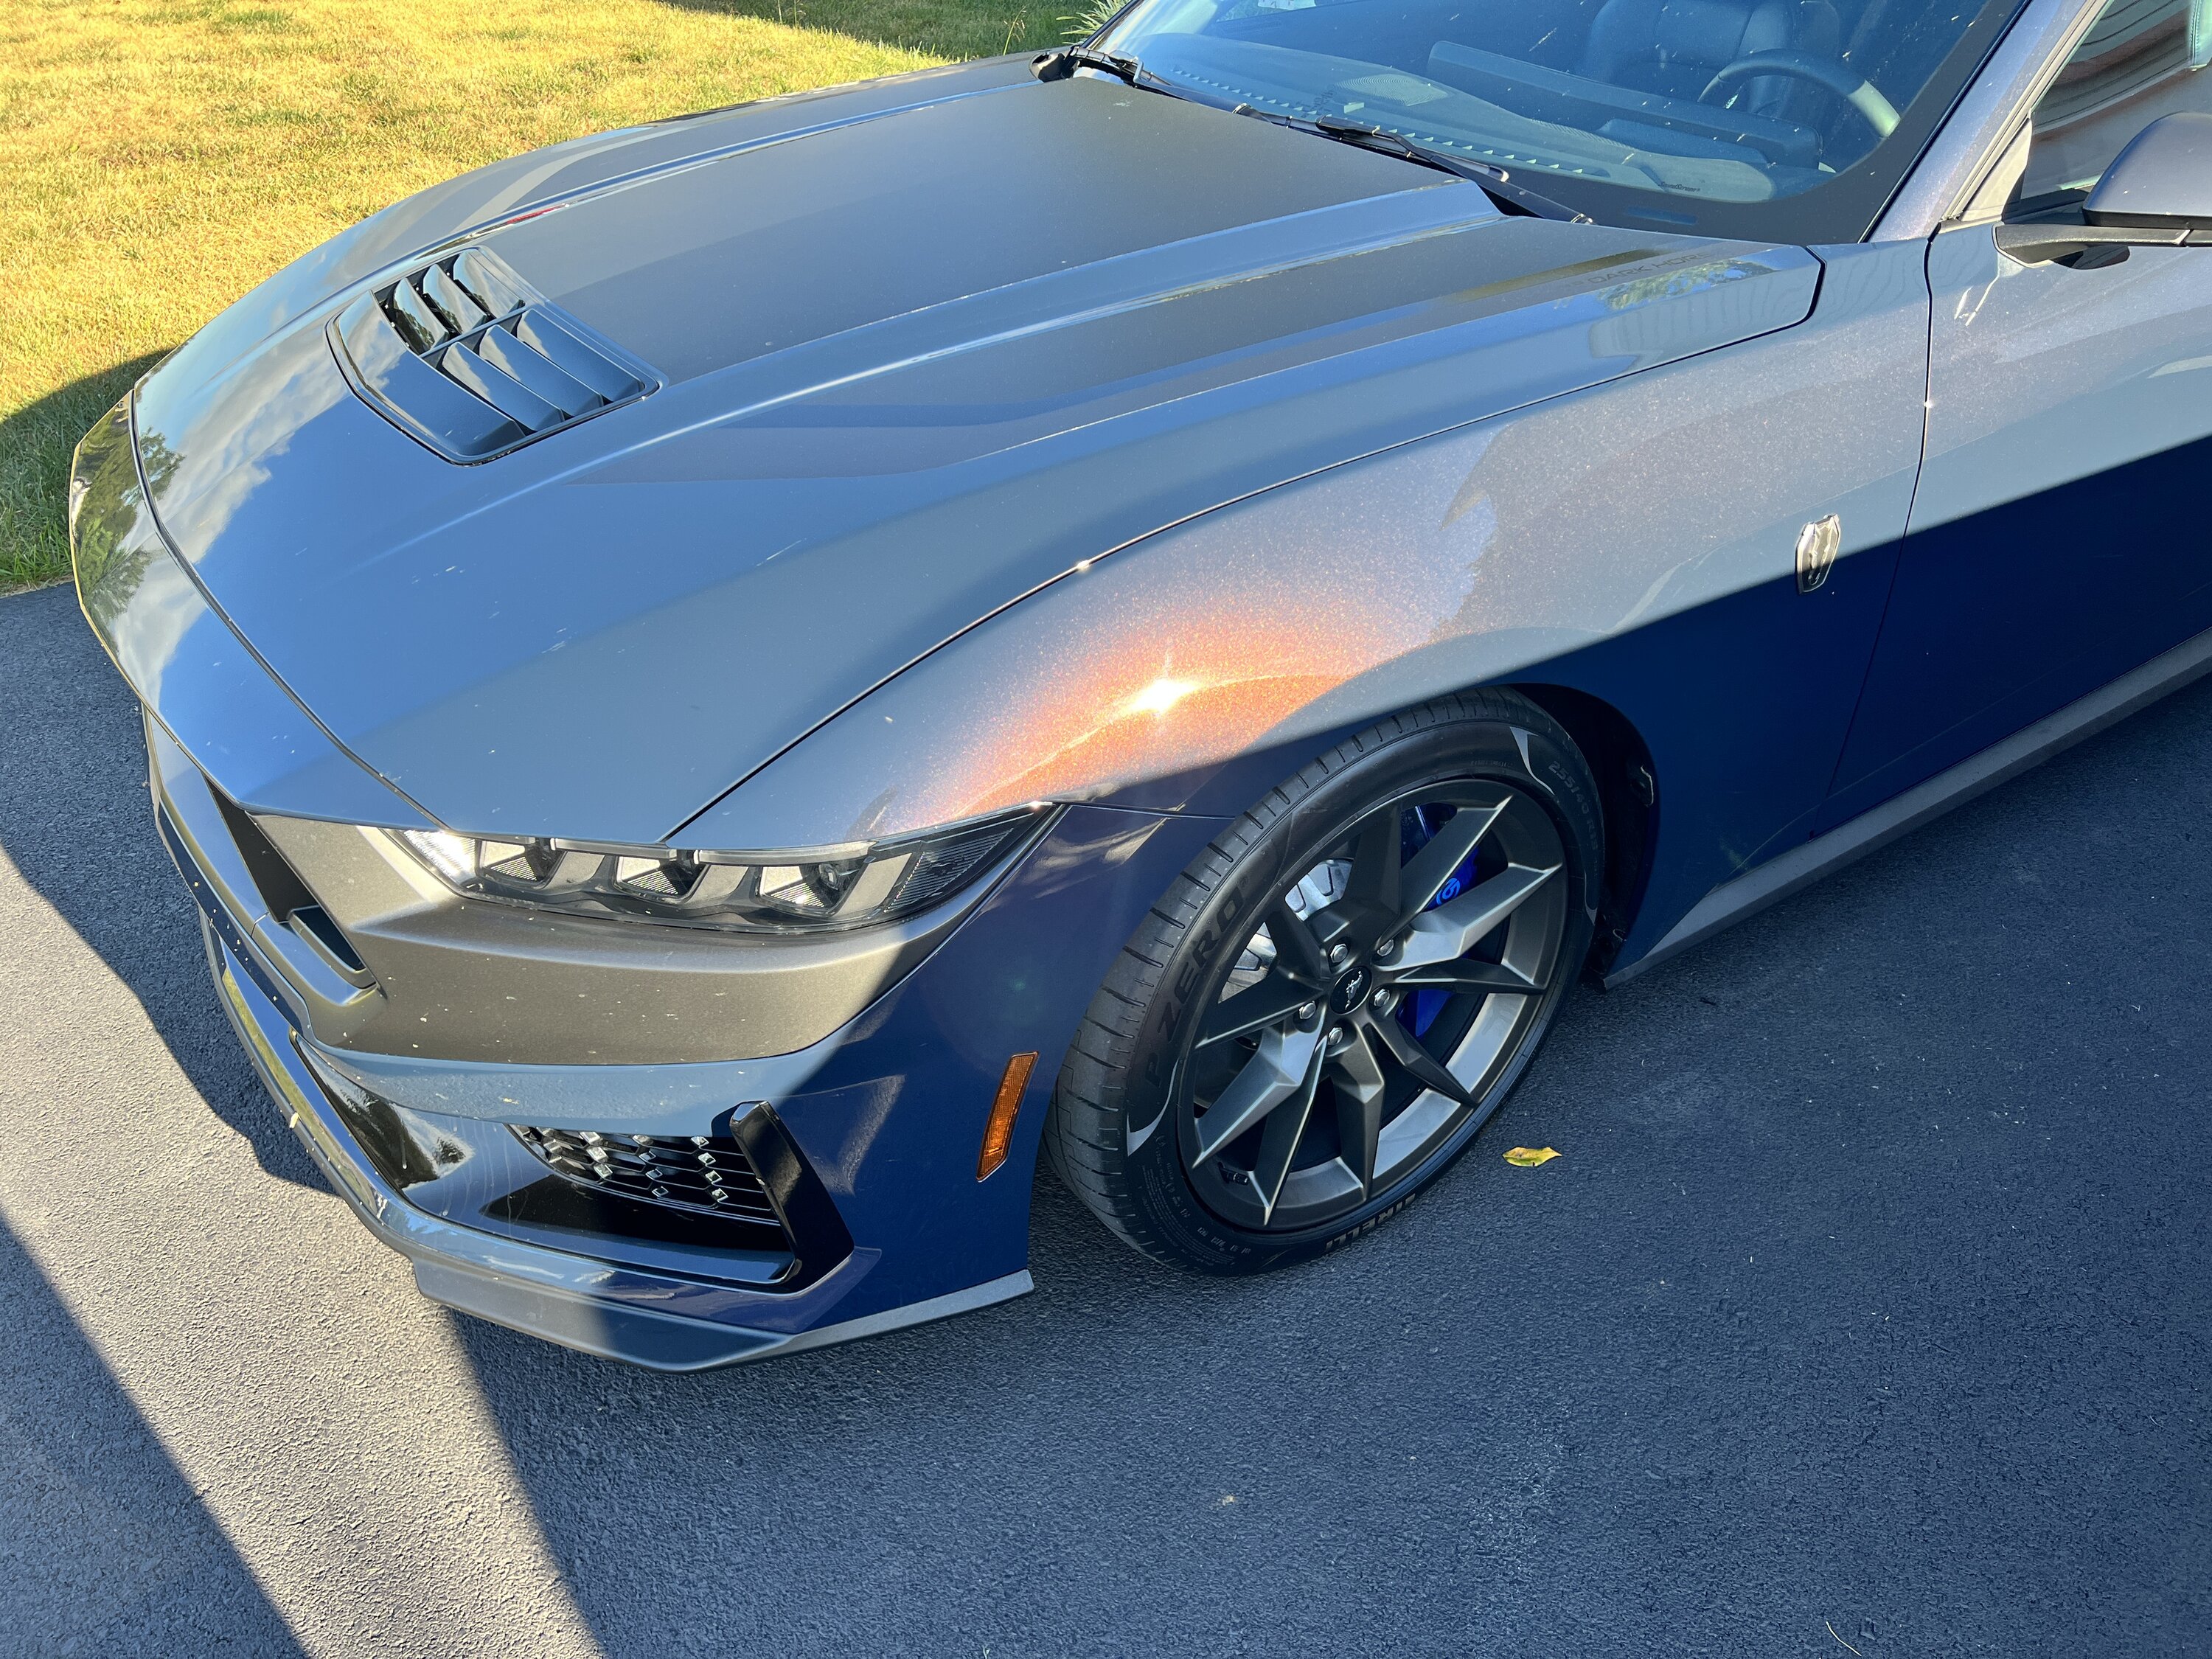 S650 Mustang Blue Ember Dark Horse For Sale - Price Reduced IMG_2391.JPG